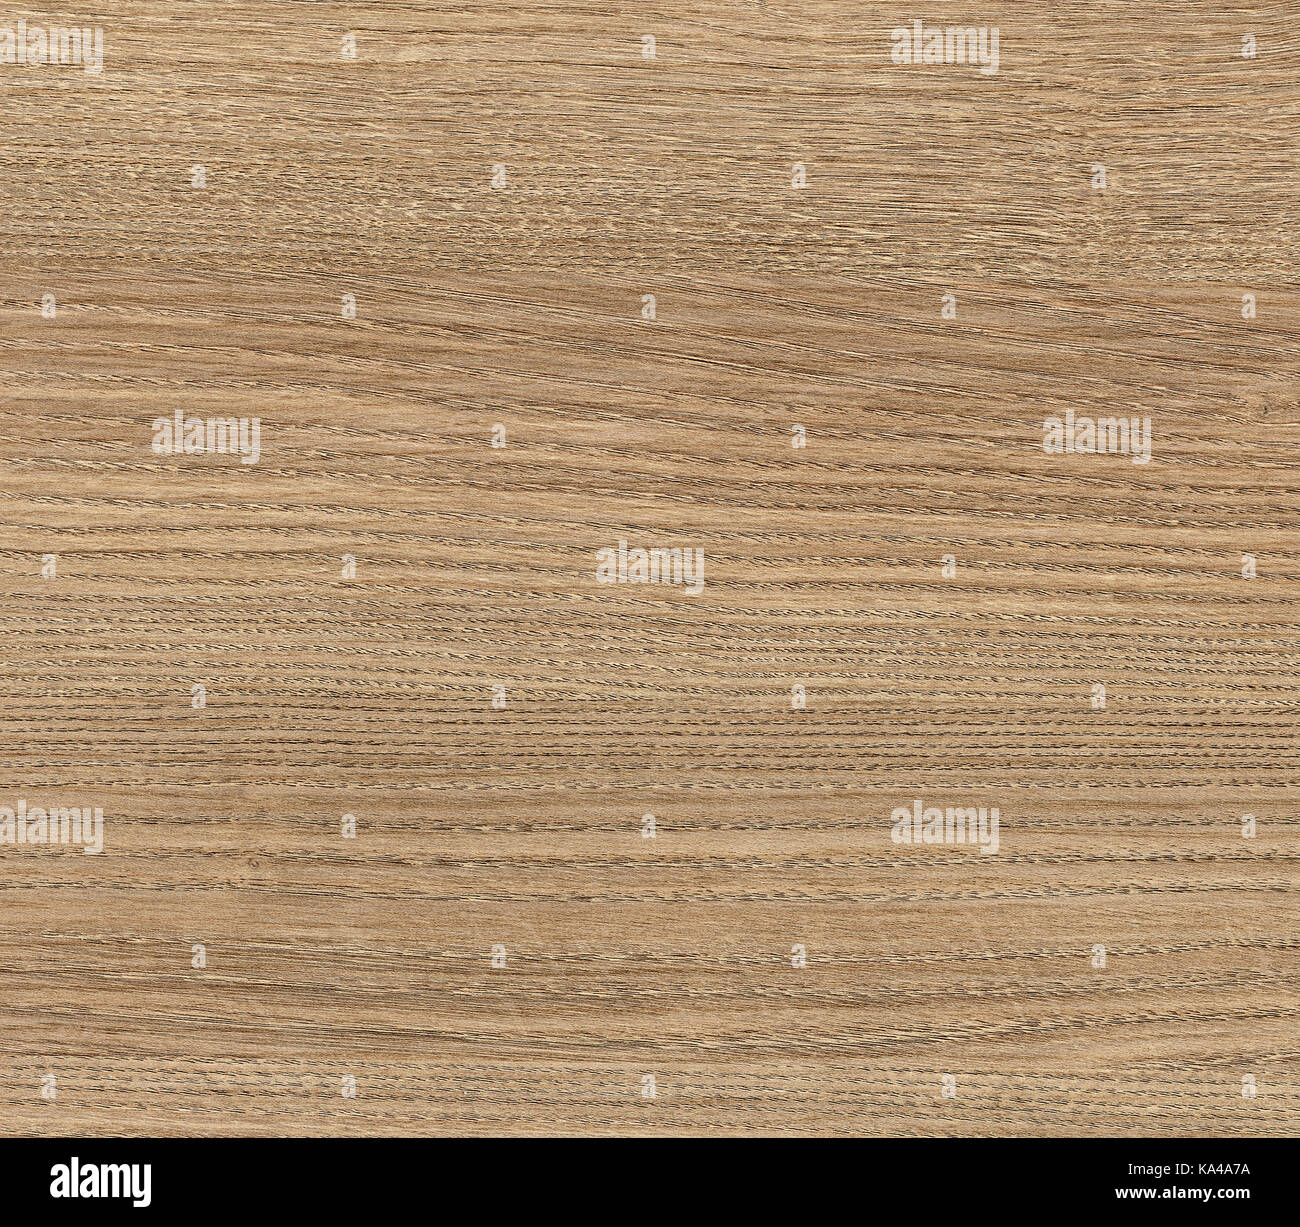 grunge wood pattern texture Stock Photo